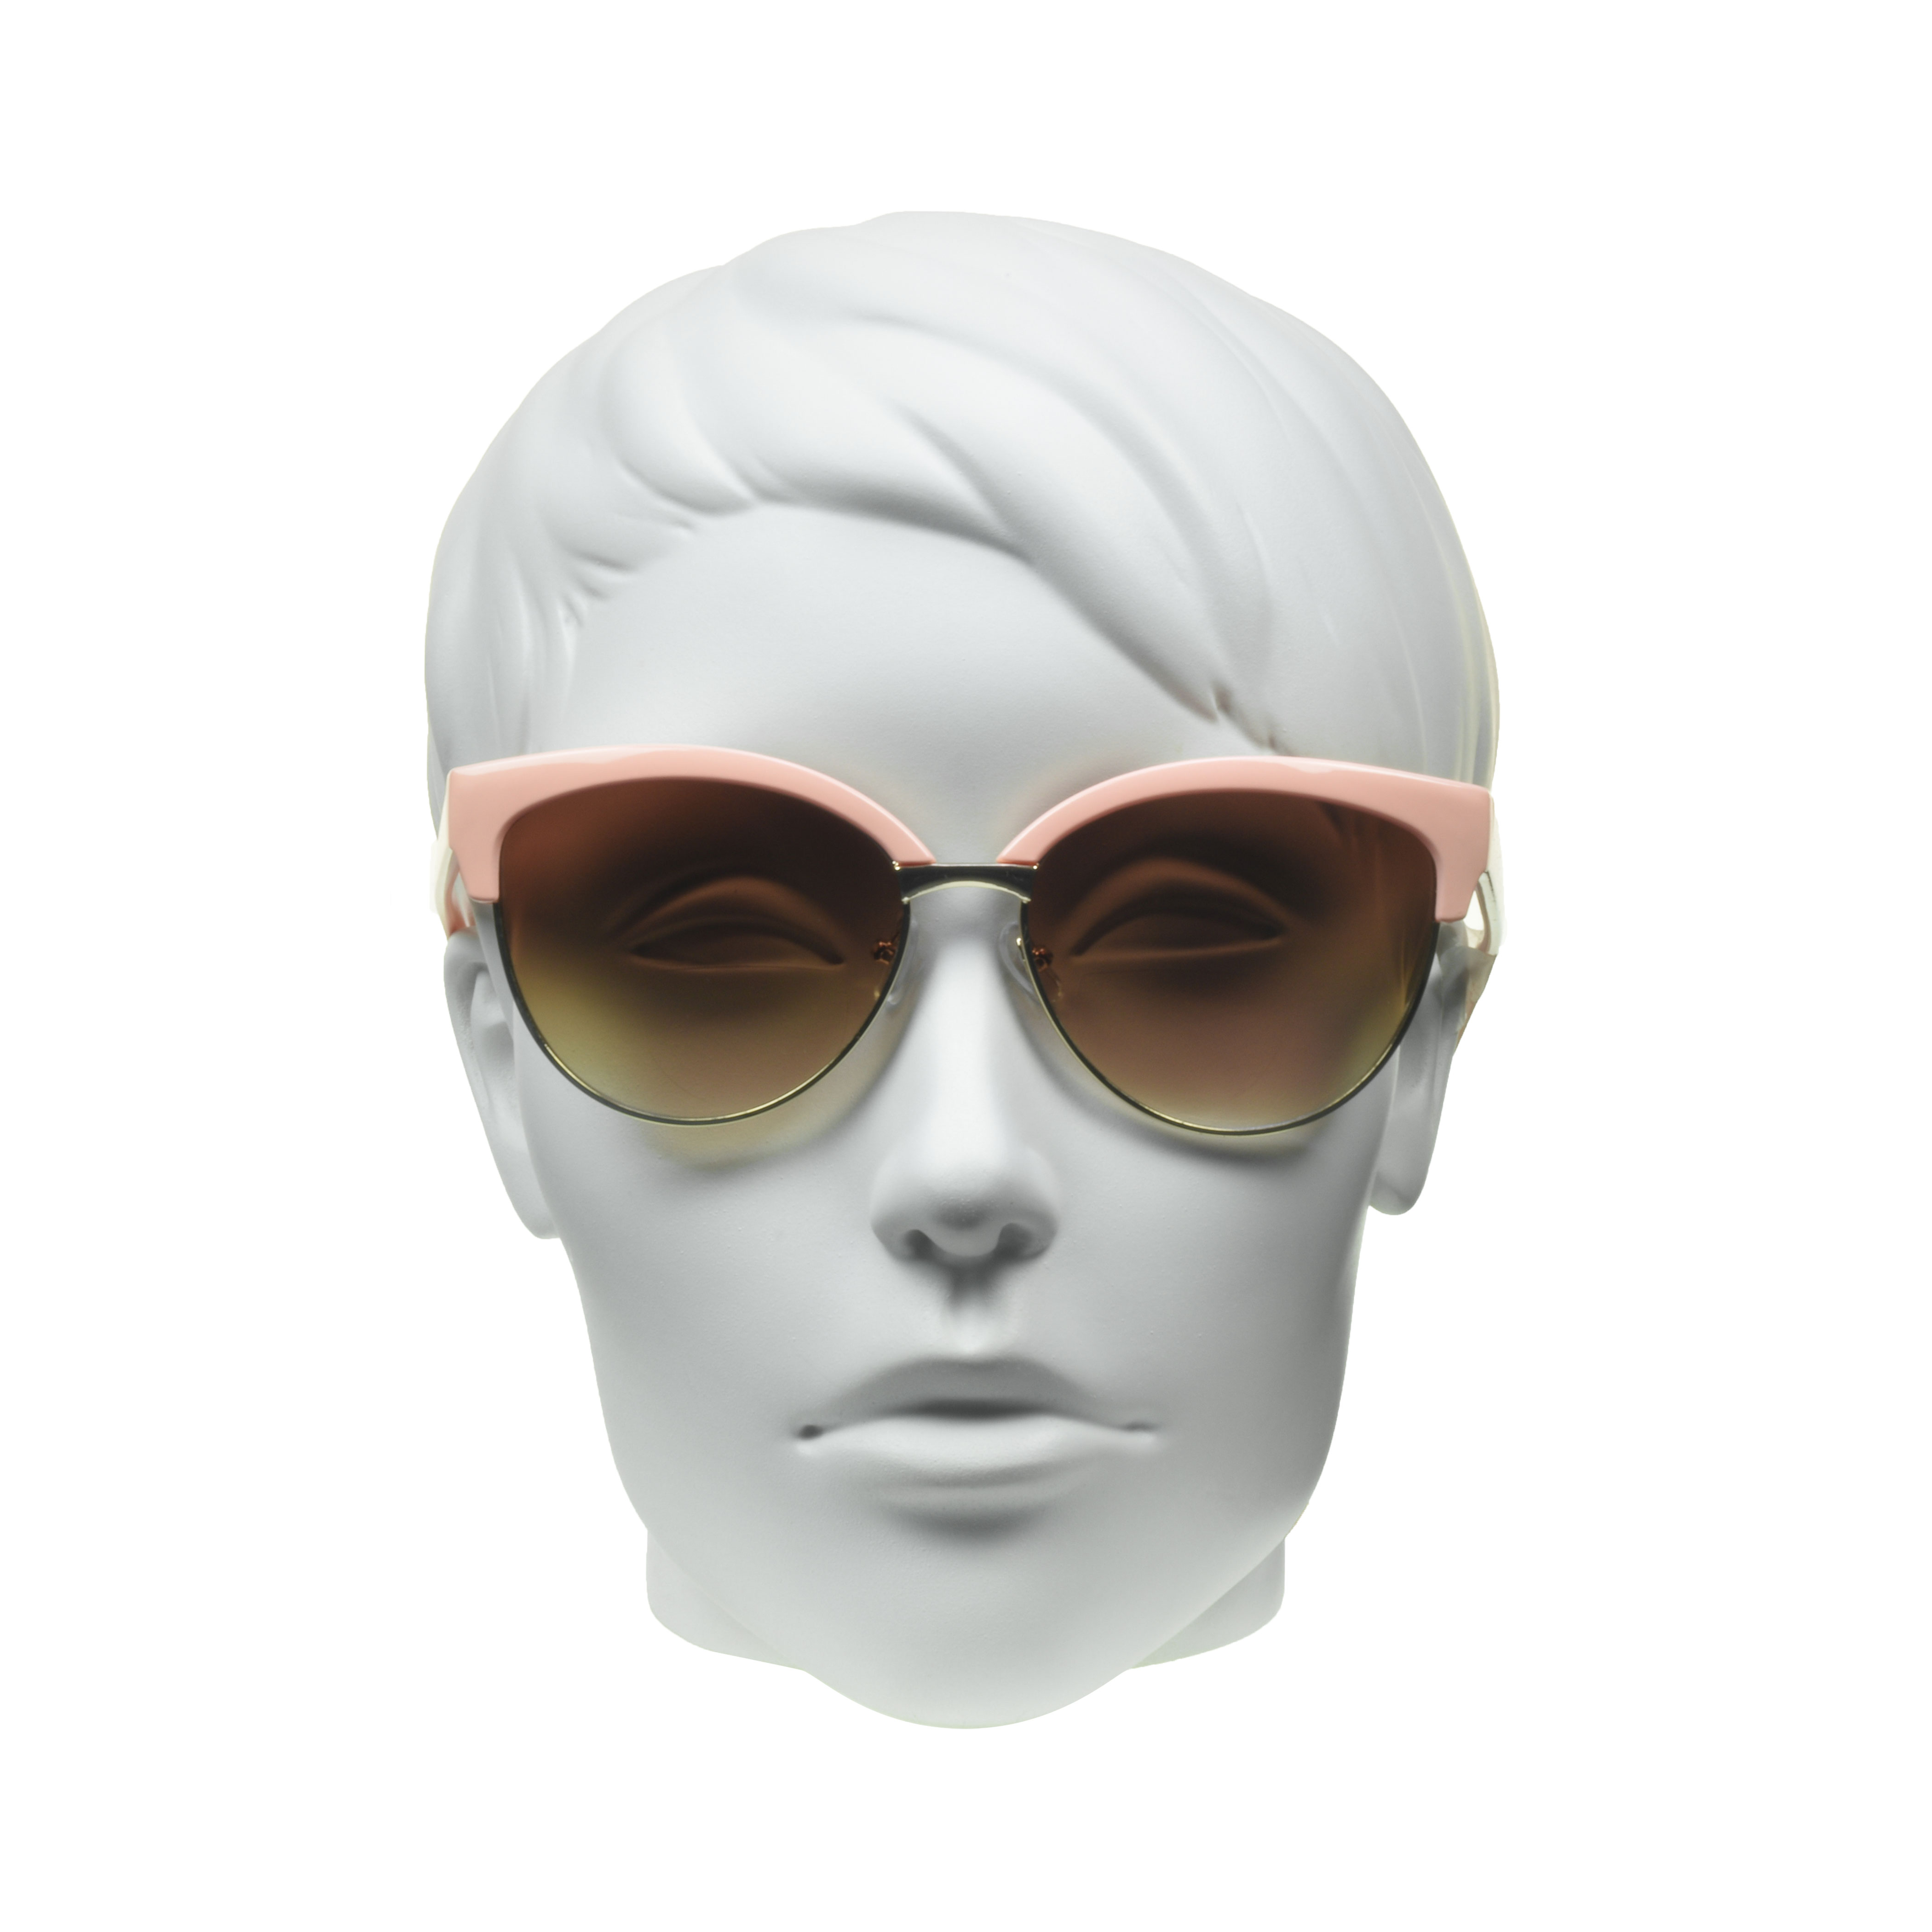 proSPORT Women Bifocal Reading Cateye Fashion Horn Rim Sunglasses Pink Gold Frame Brown Lens +3.00 - image 3 of 5